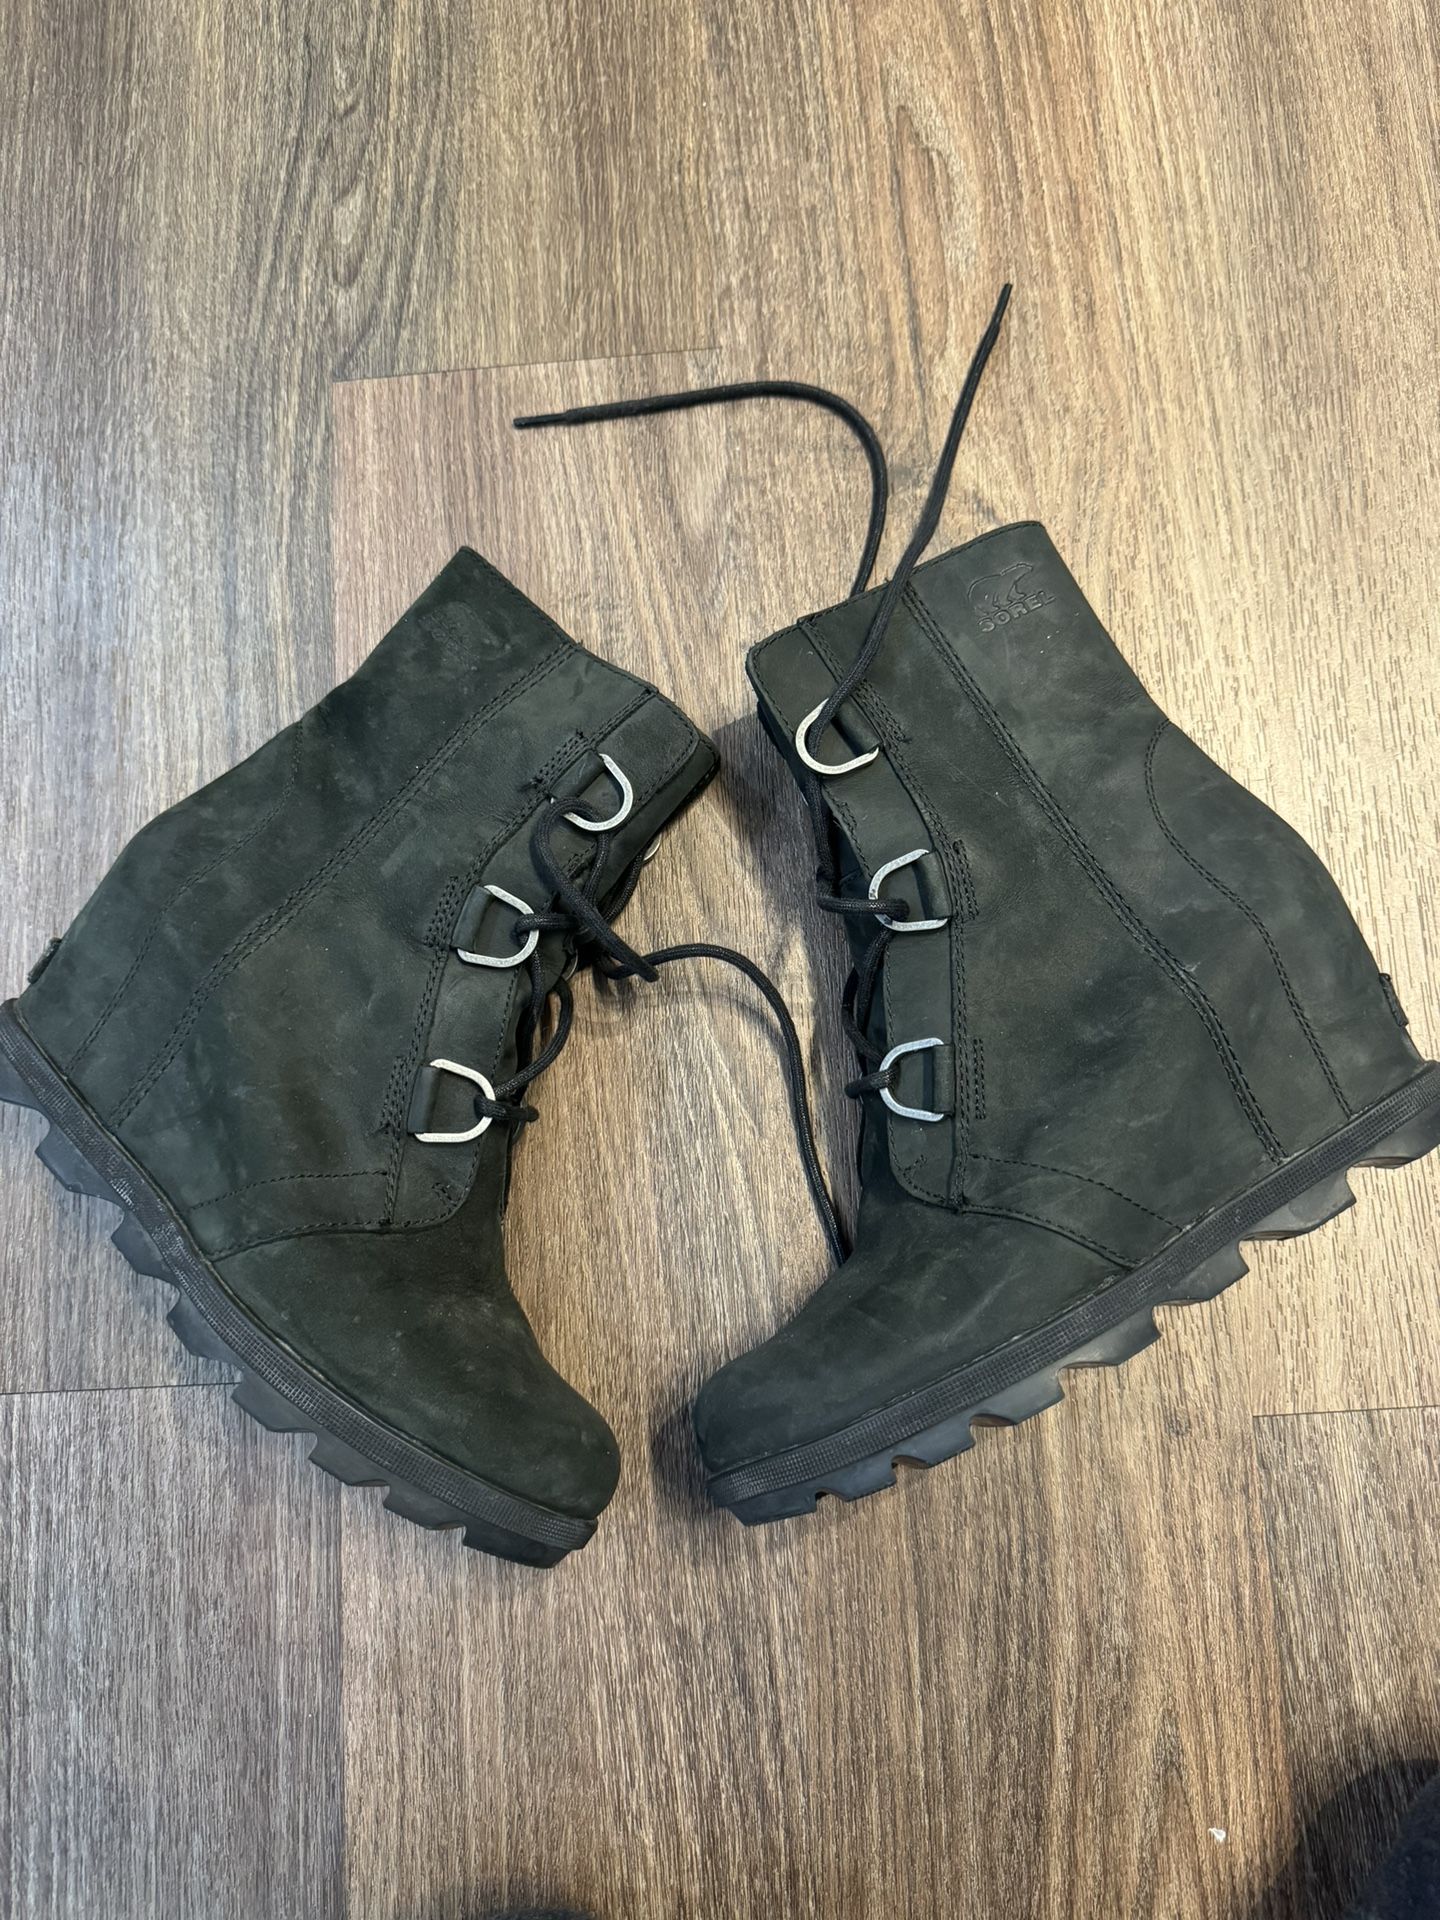 Women’s Sorel Winter Boots Size 9.5 